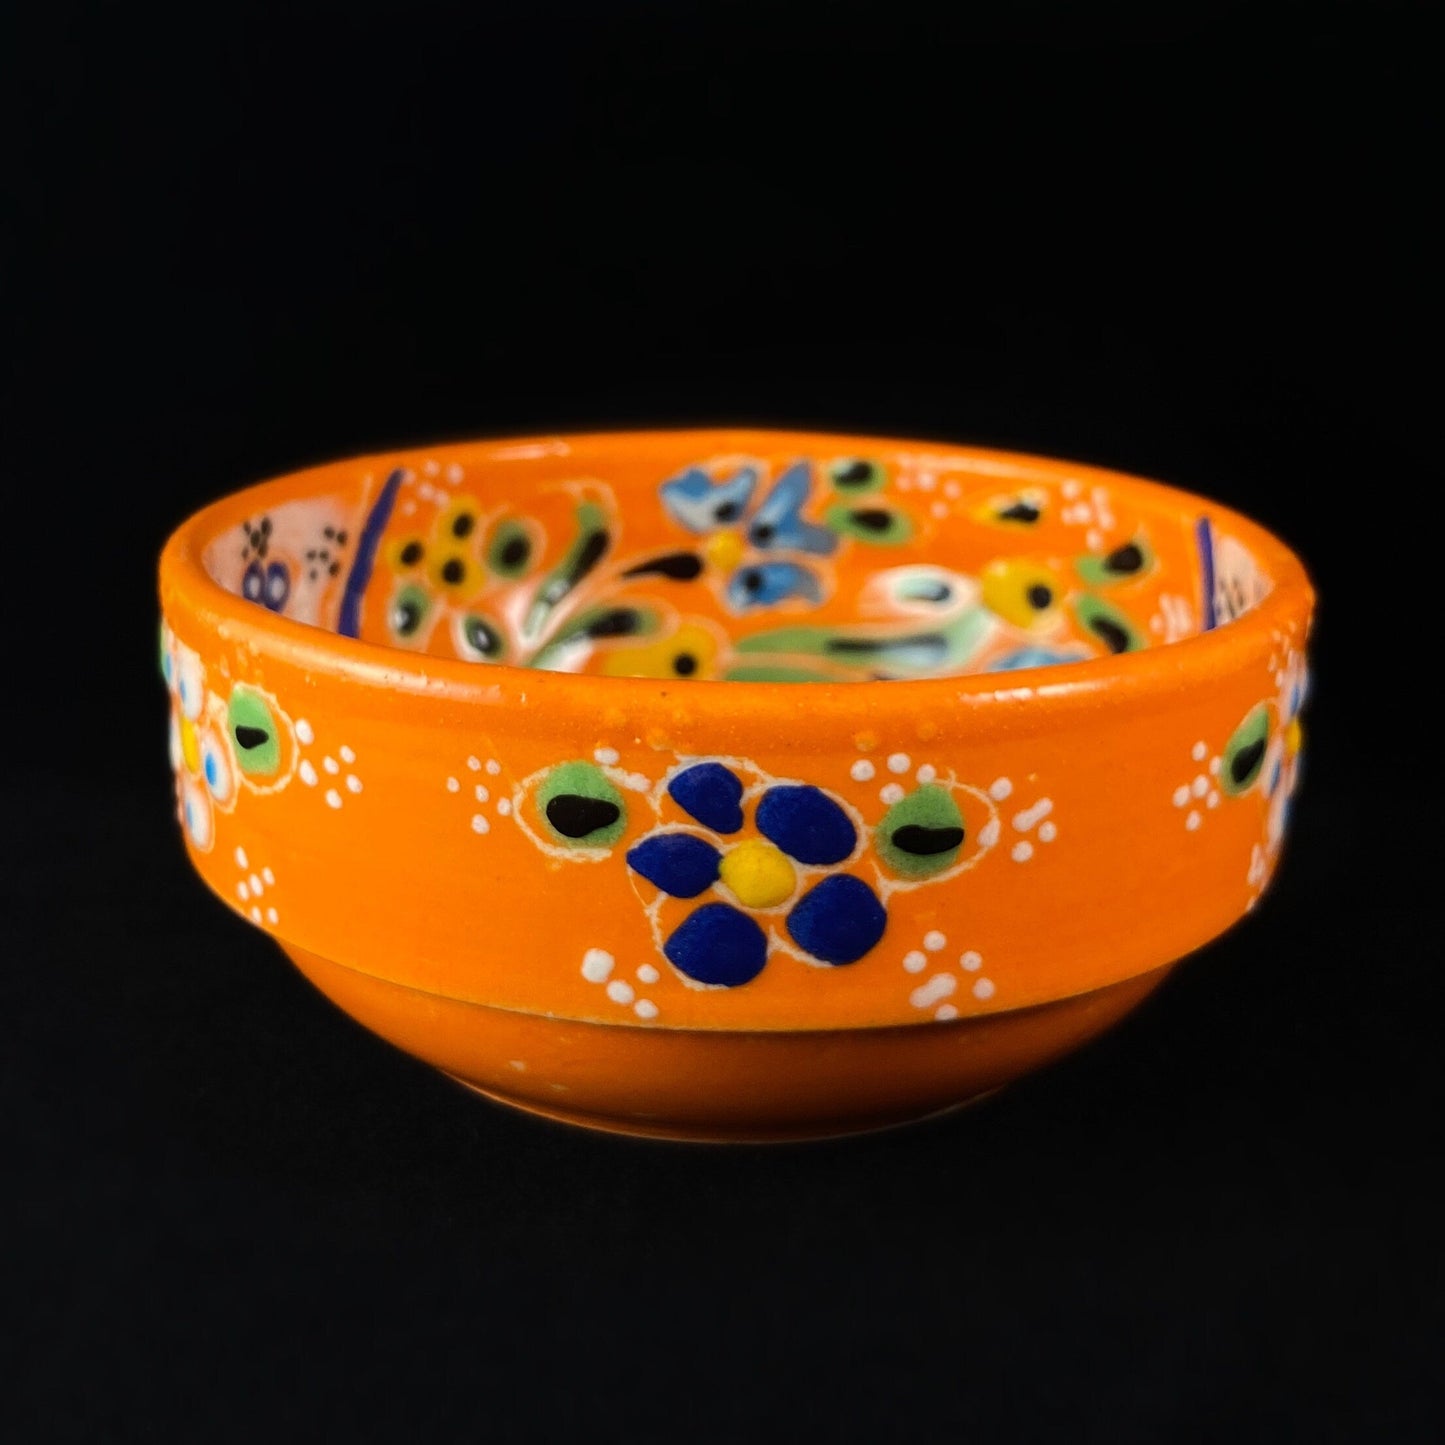 Handmade Small Bowl, Functional and Decorative Turkish Pottery, Cottagecore Style, Orange